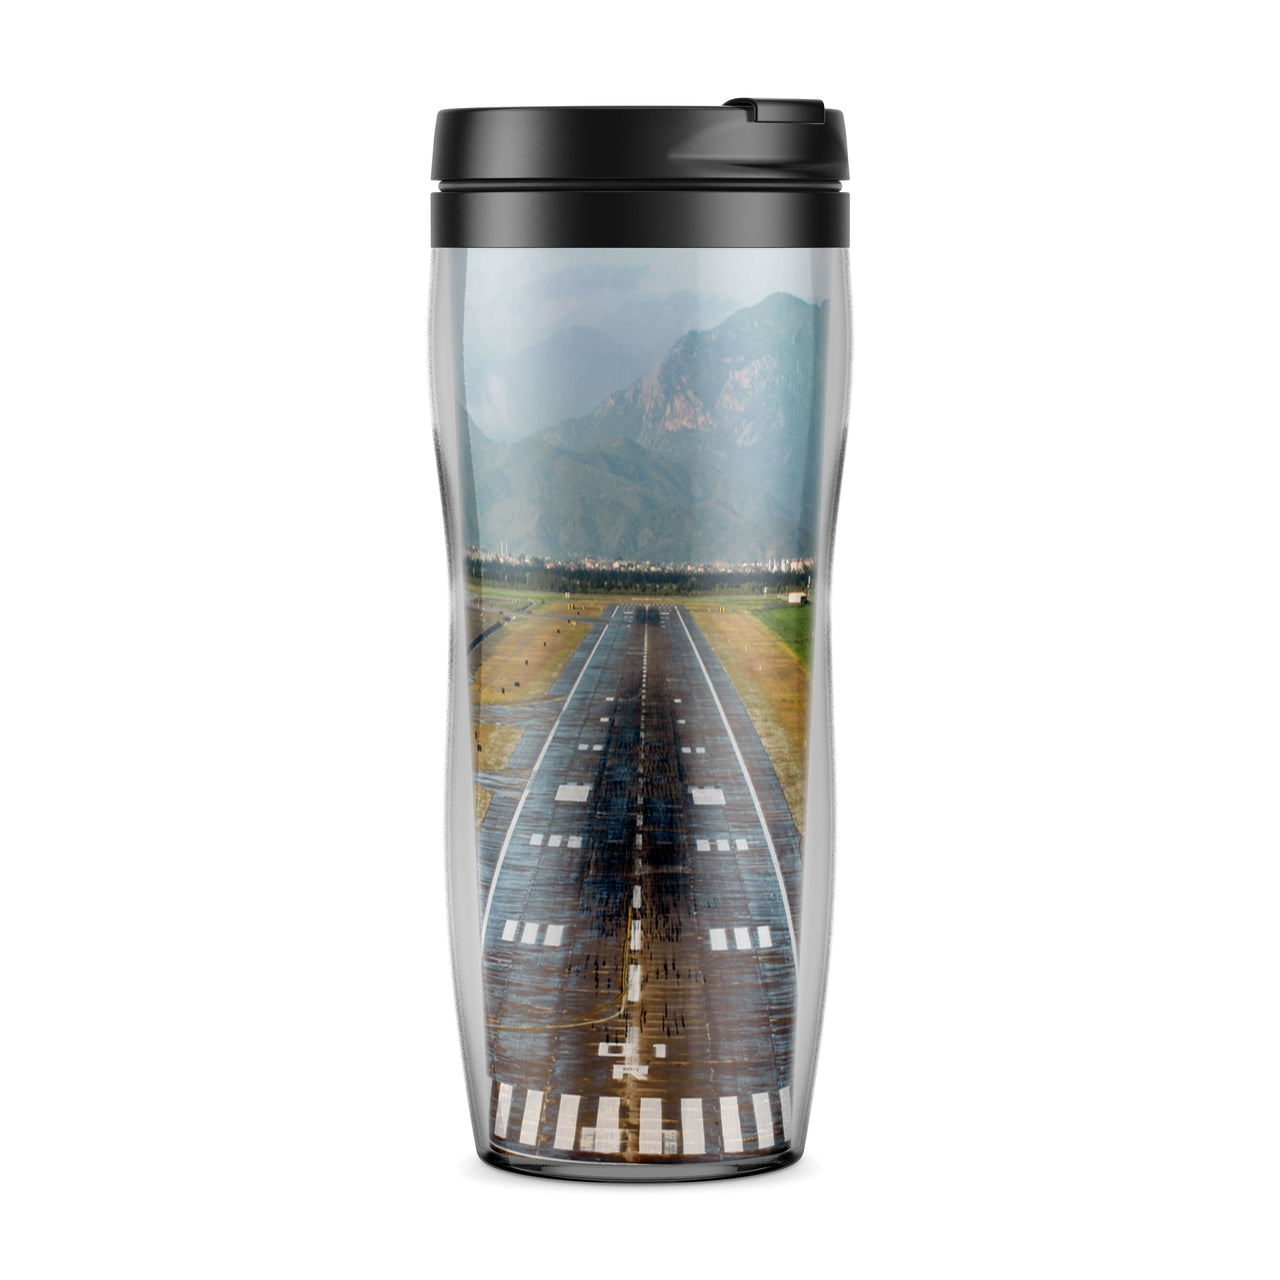 Amazing Mountain View & Runway Designed Travel Mugs